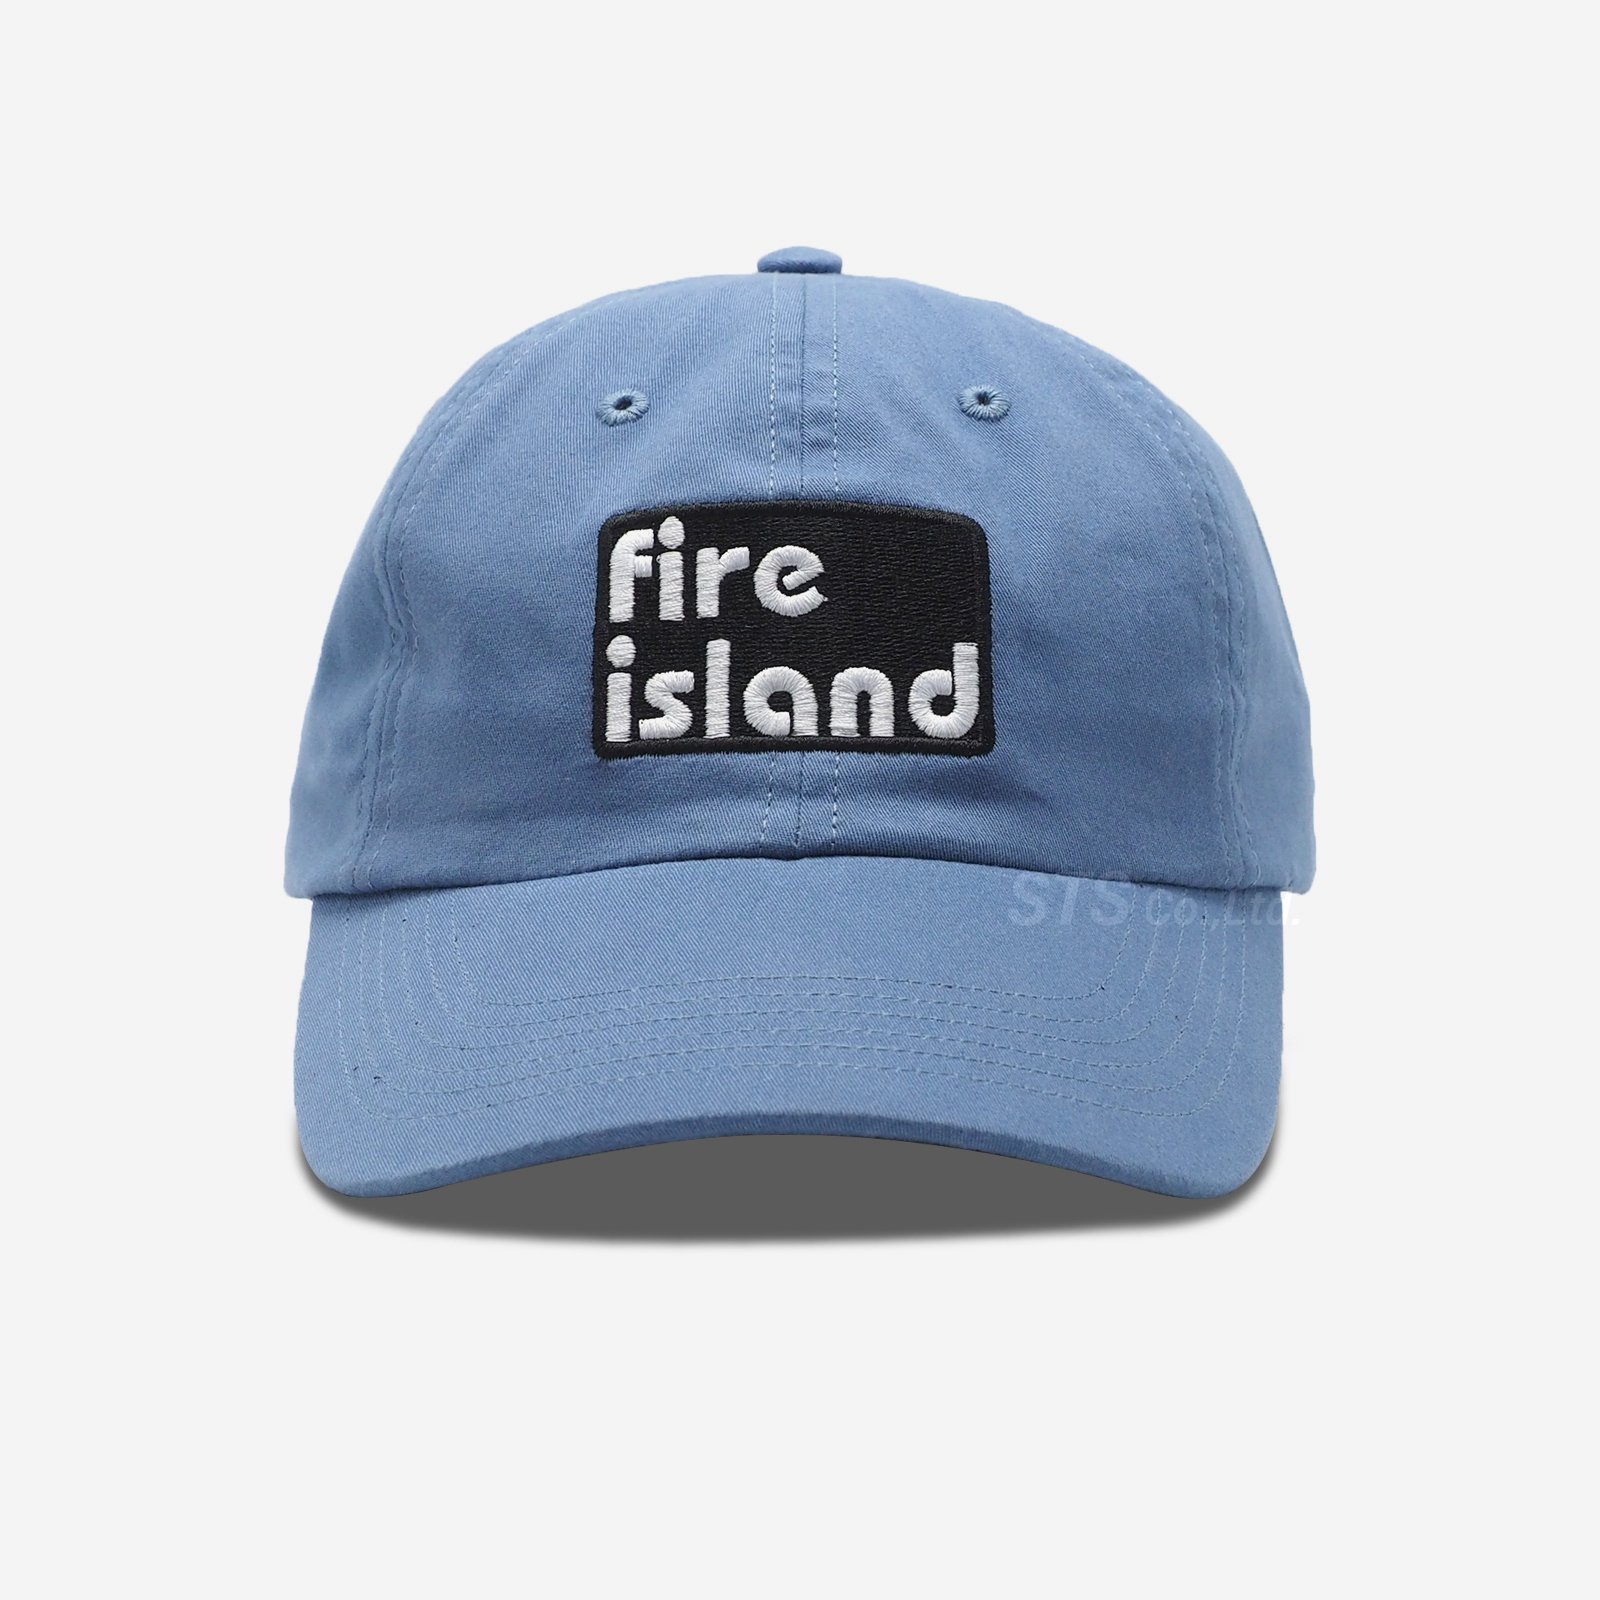 Bianca Chandon - Fire Island Cap - UG.SHAFT